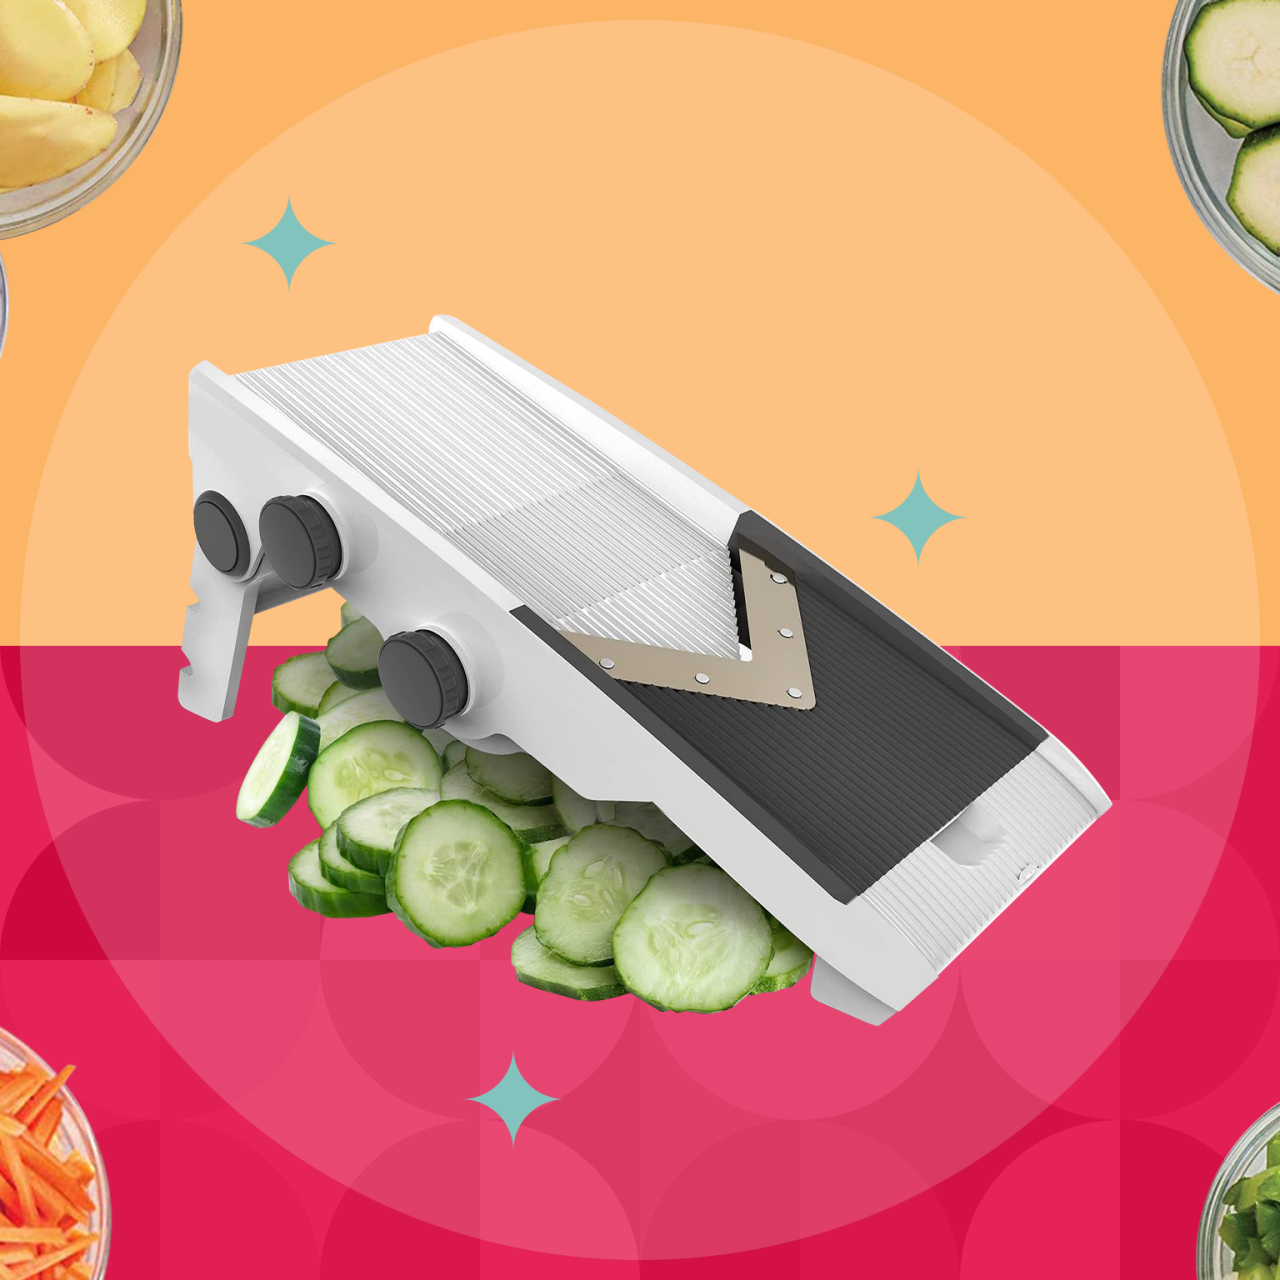 How to use ONCE FOR ALL Rapid-prep Mandoline Vegetable Slicer